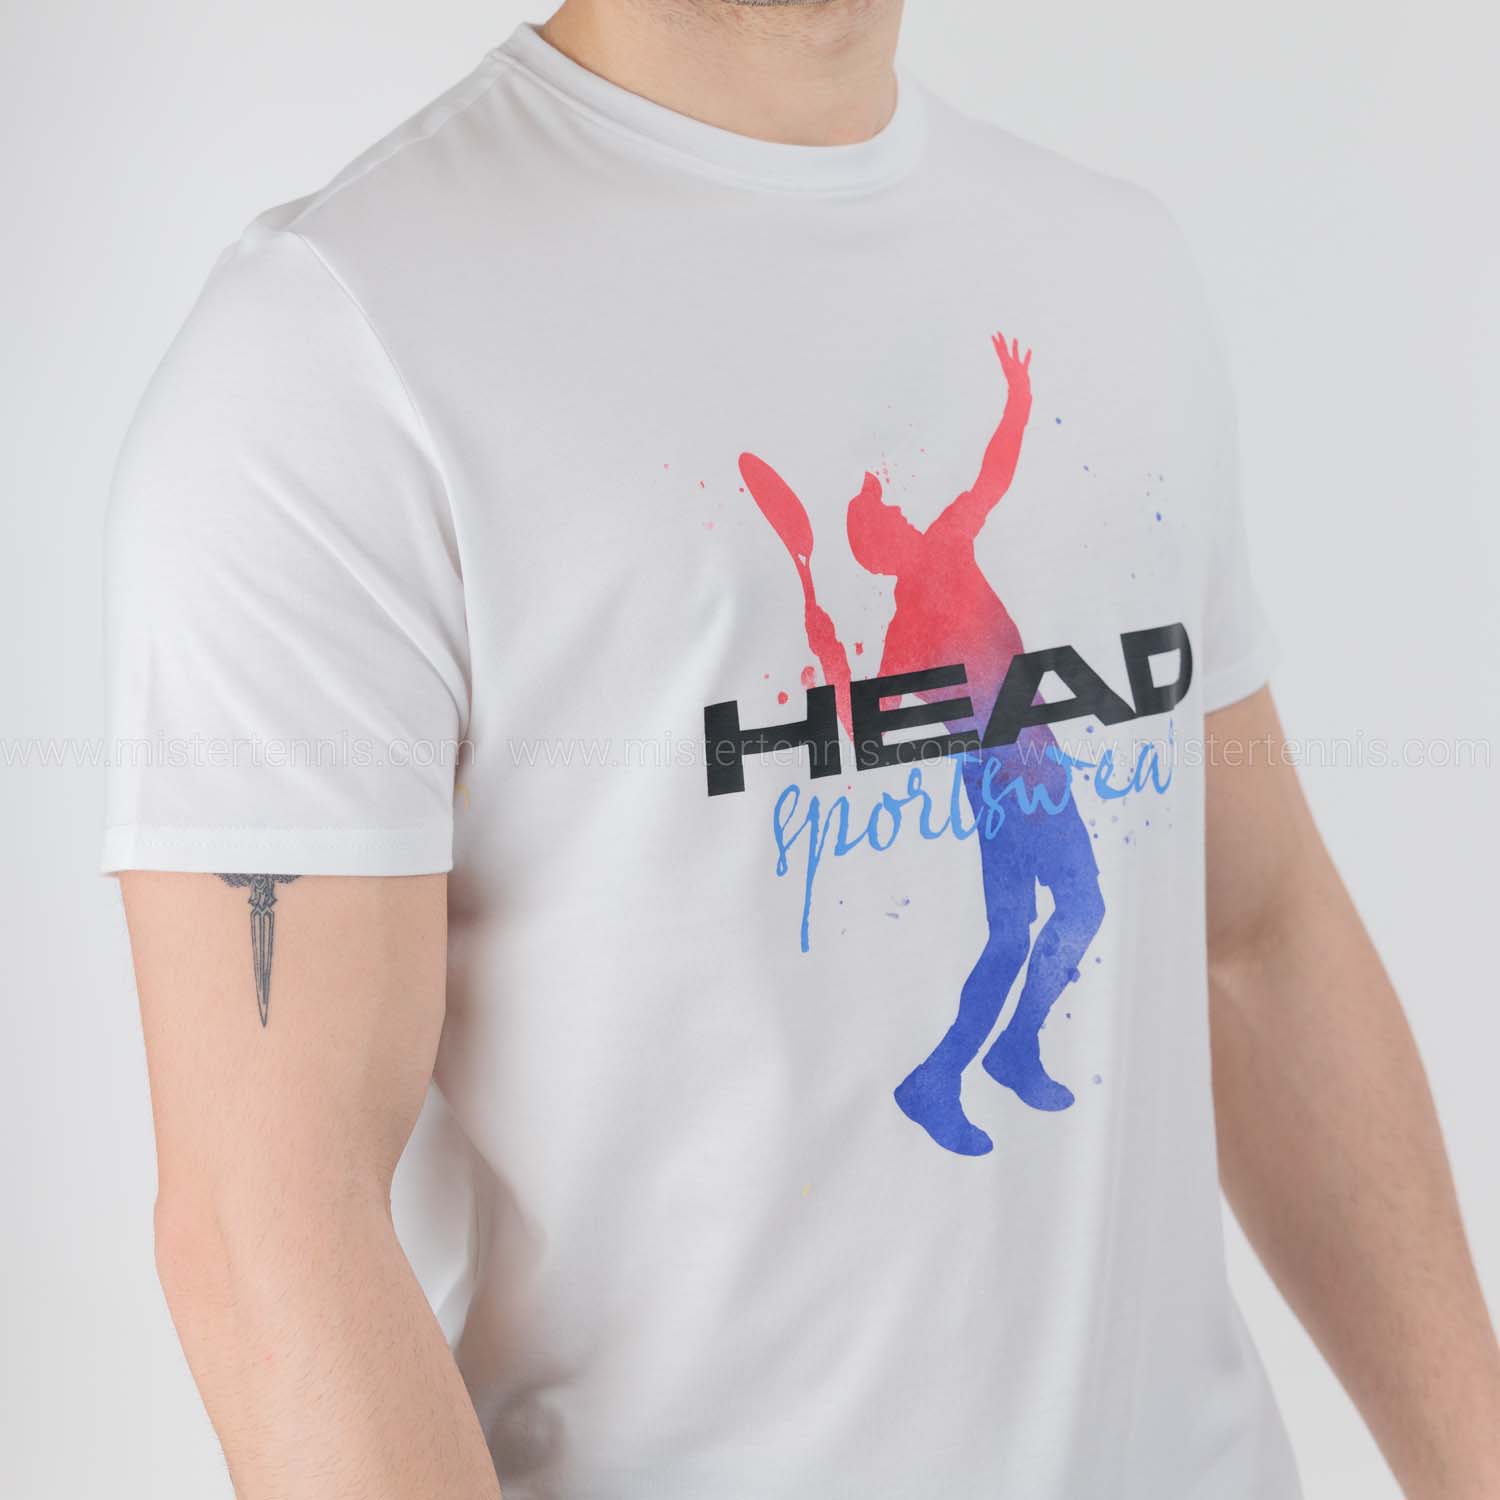 Head Racquet T-Shirt - White/Red